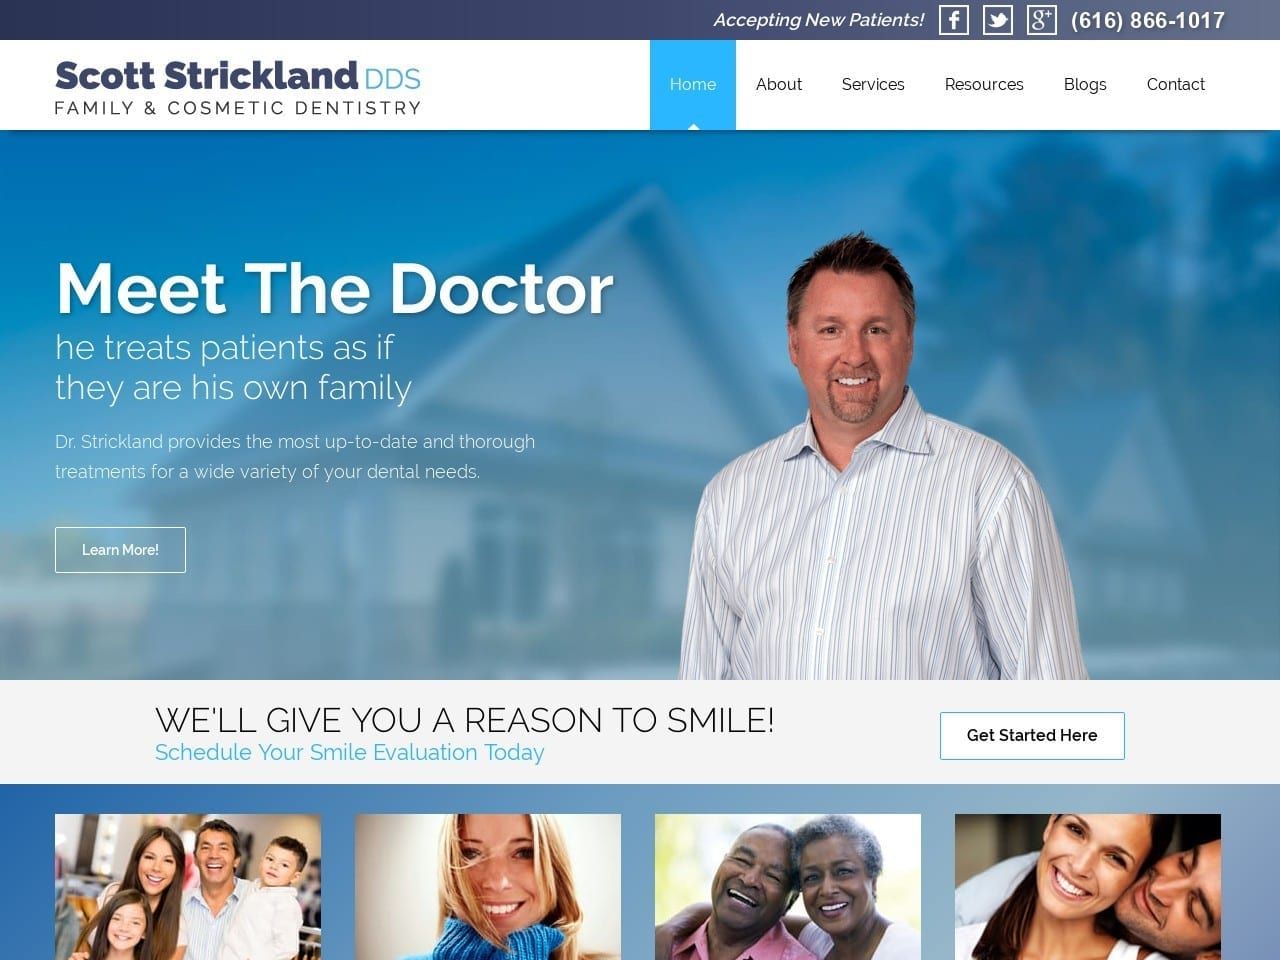 Scott Strickland DDS PLLC Website Screenshot from scottstricklanddds.com